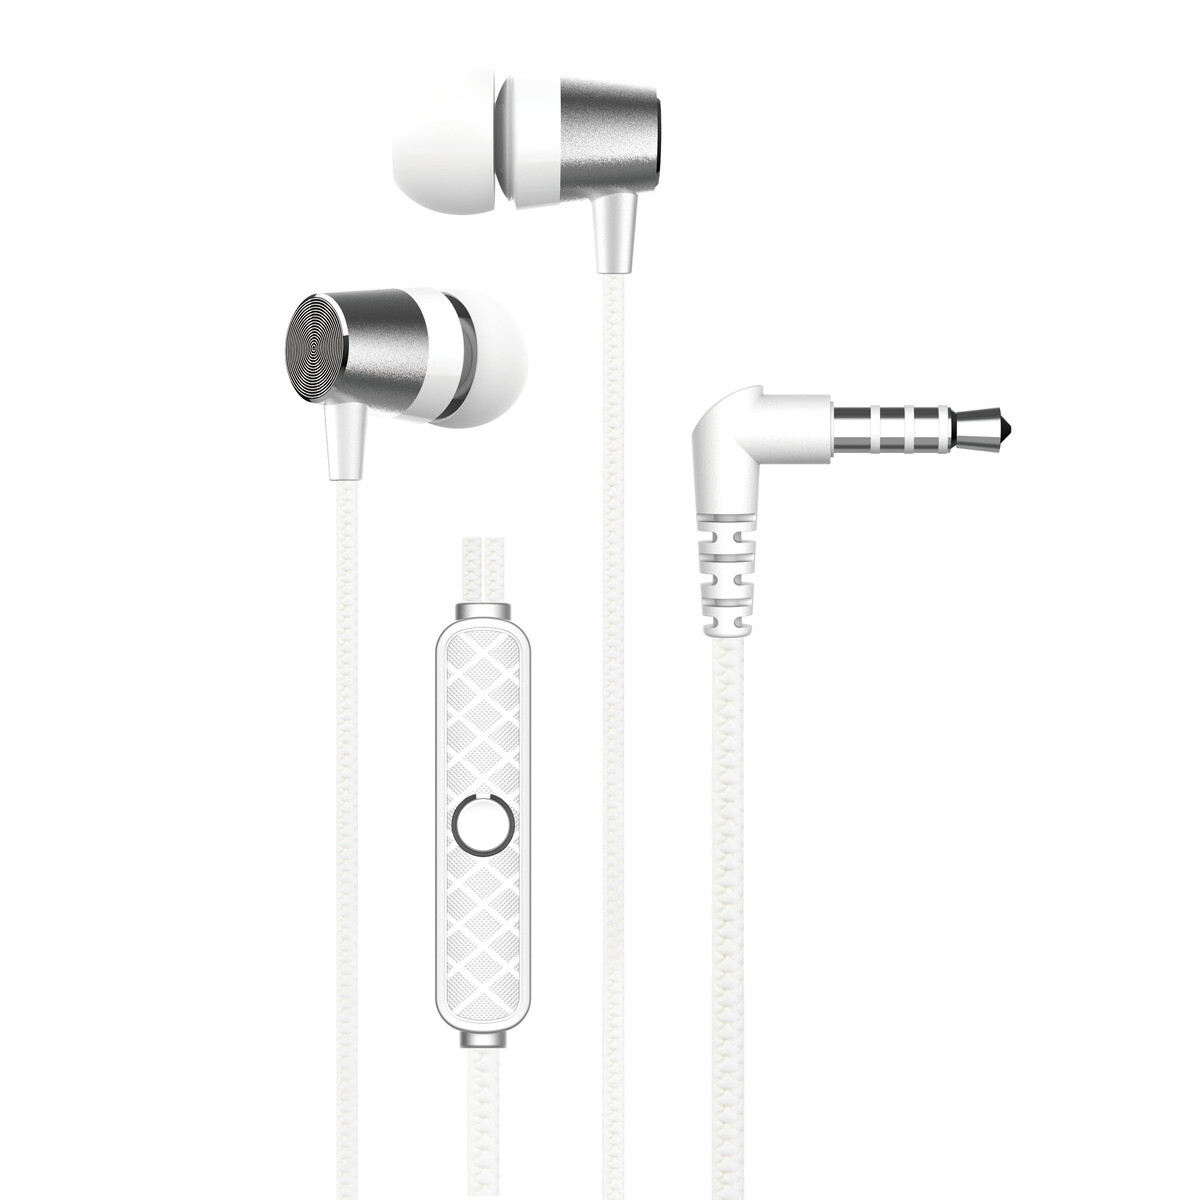 Devia metal earphone kintone seires 3.5mm White